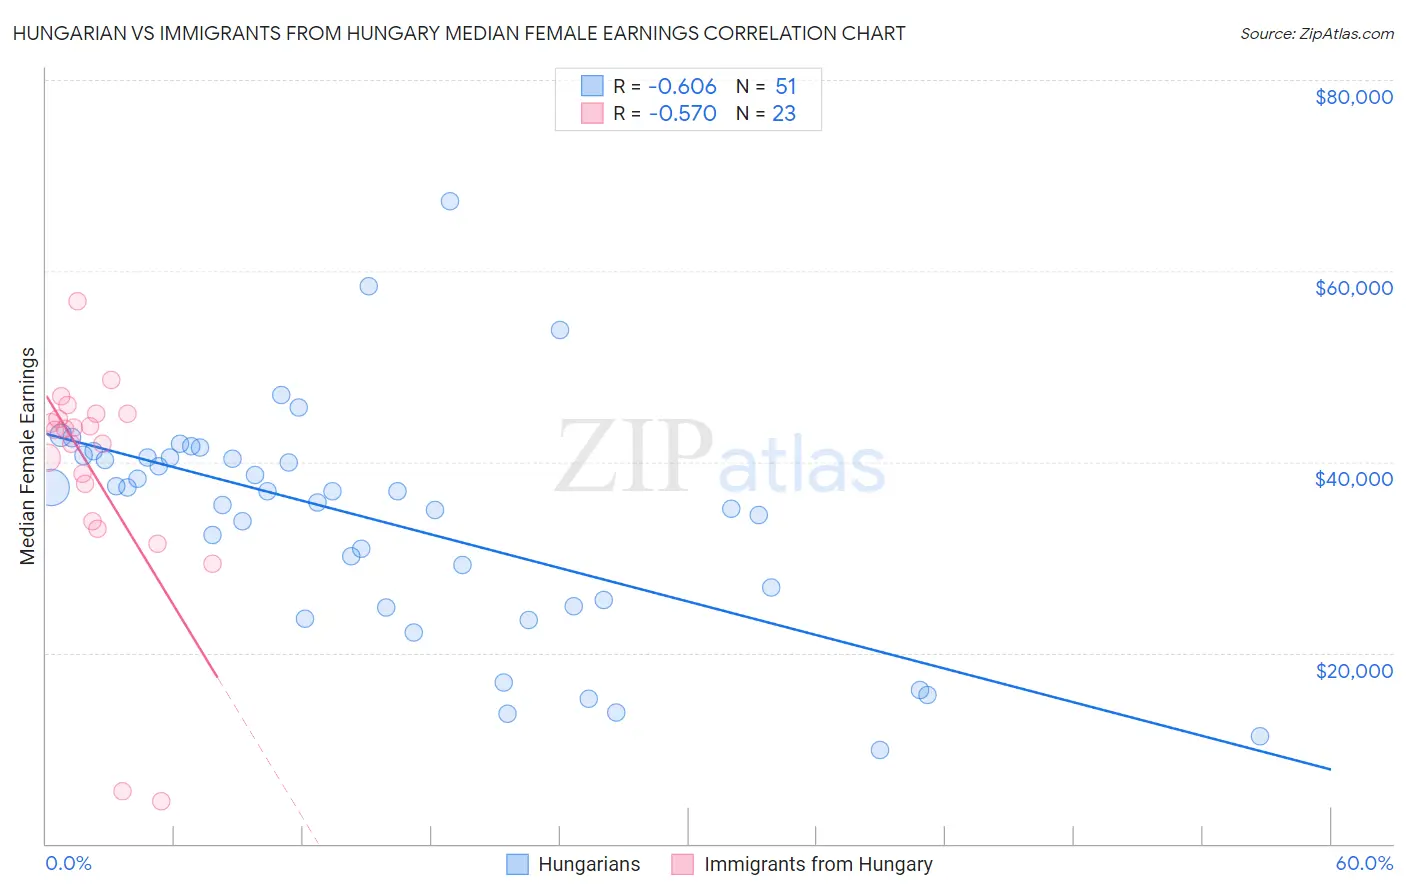 Hungarian vs Immigrants from Hungary Median Female Earnings